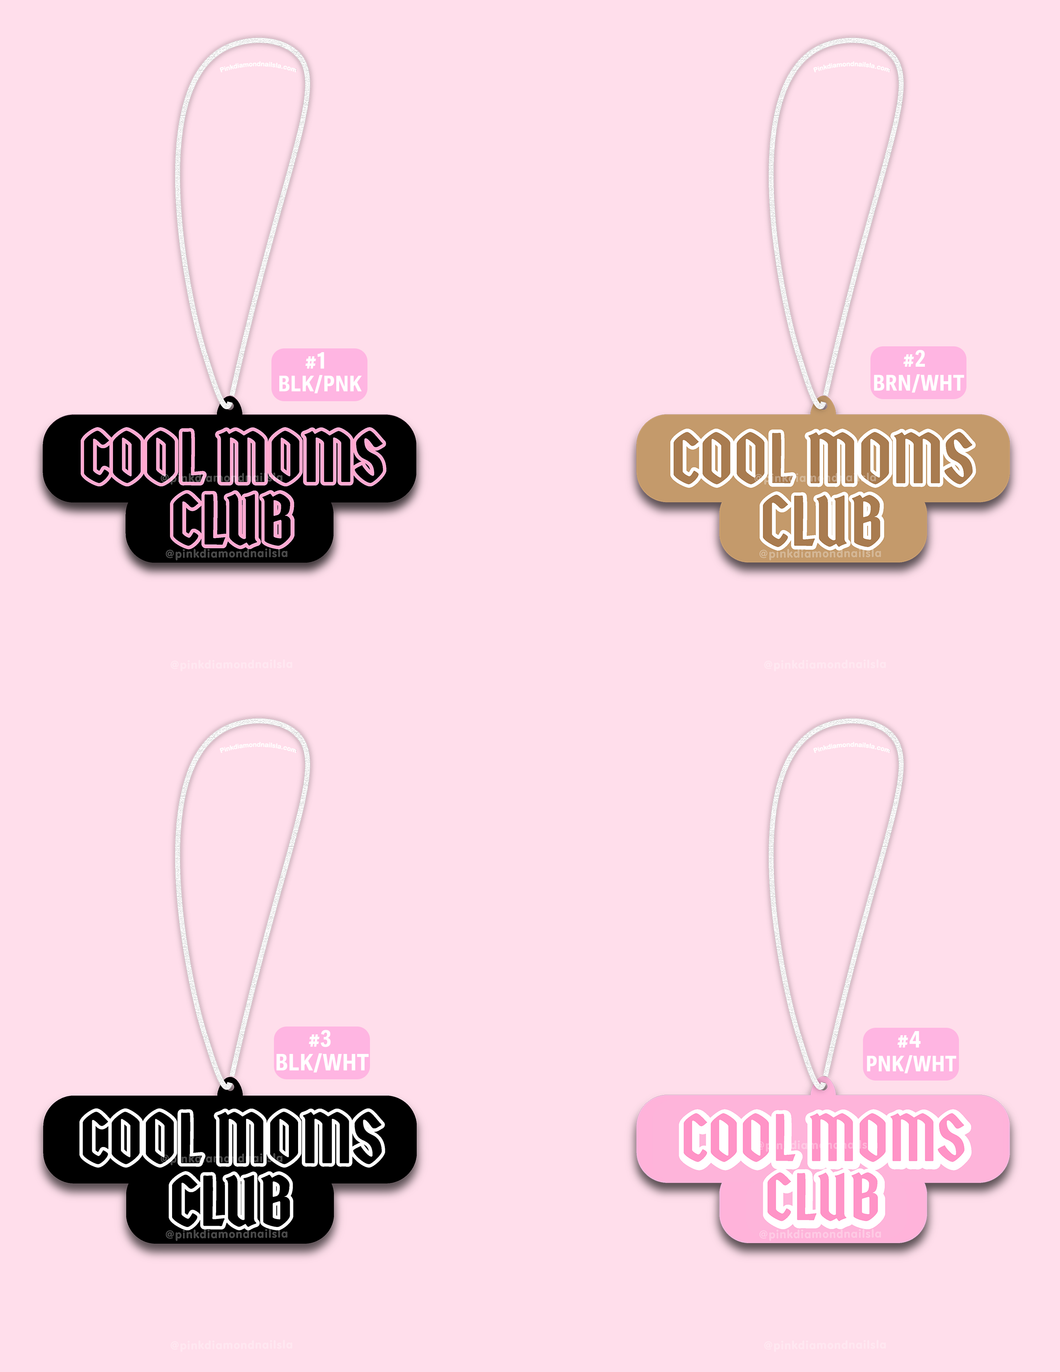 Cool moms club - Hangable ornament